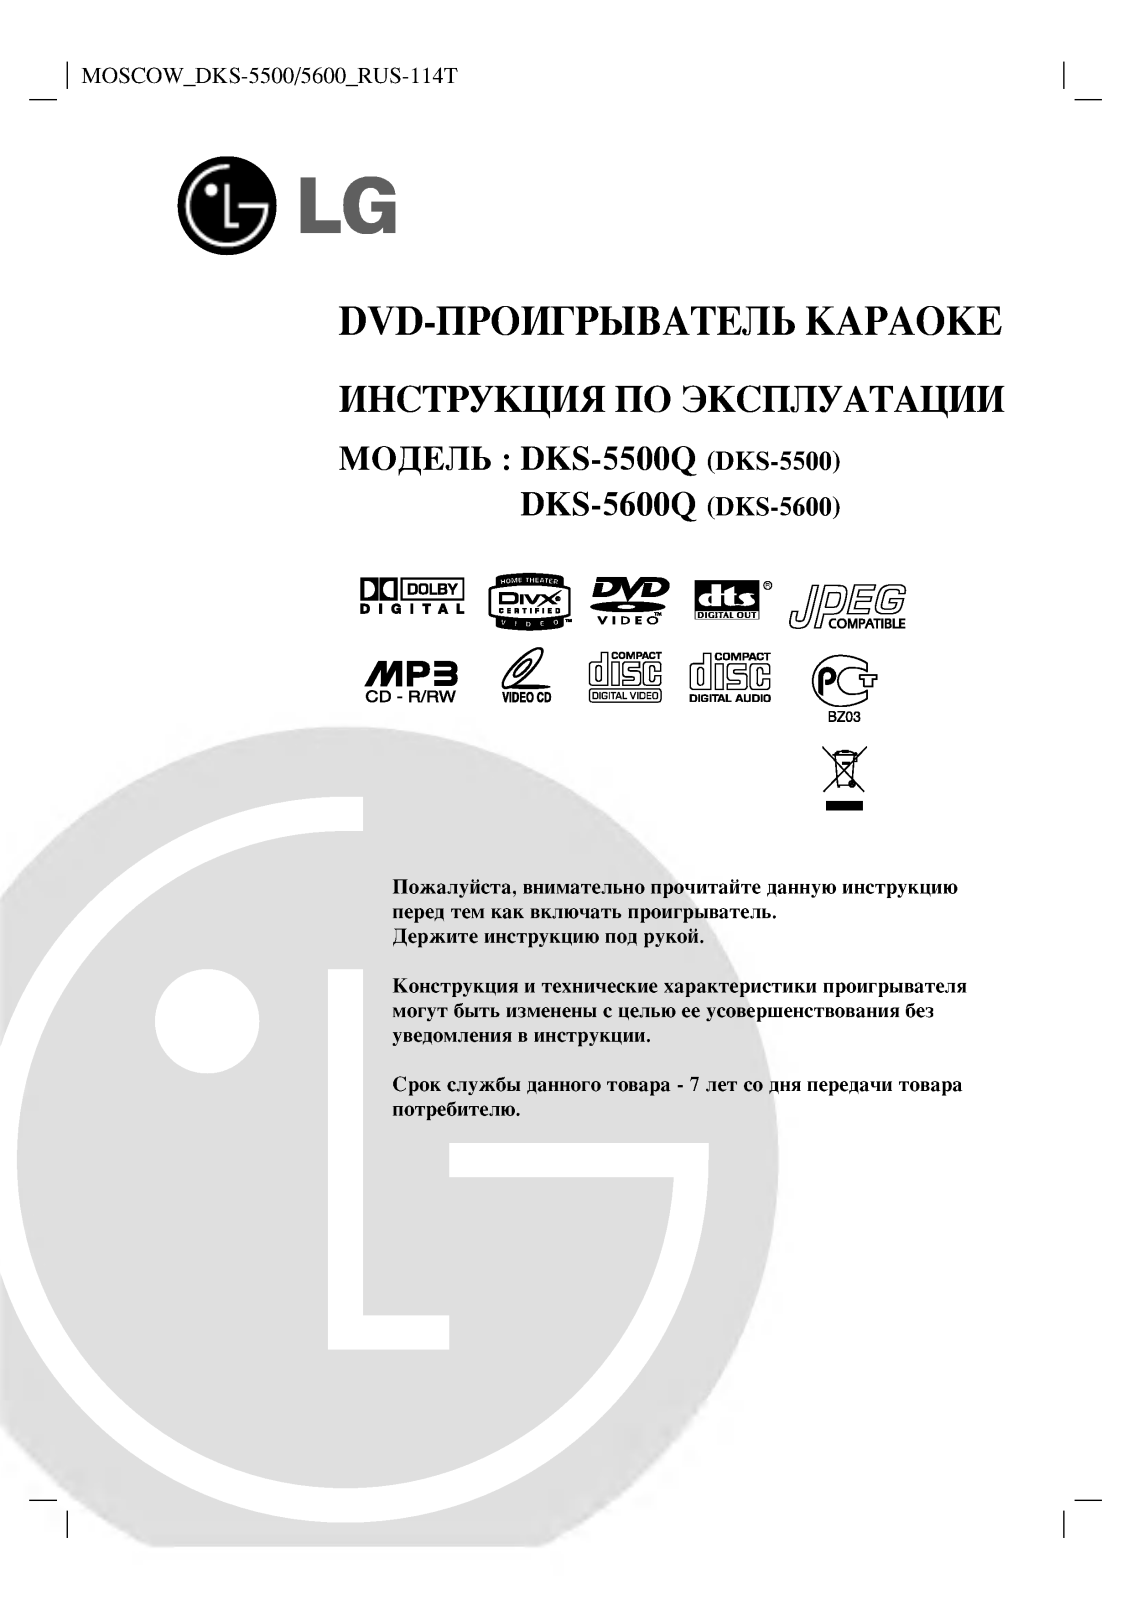 LG DKS-5600 User Manual